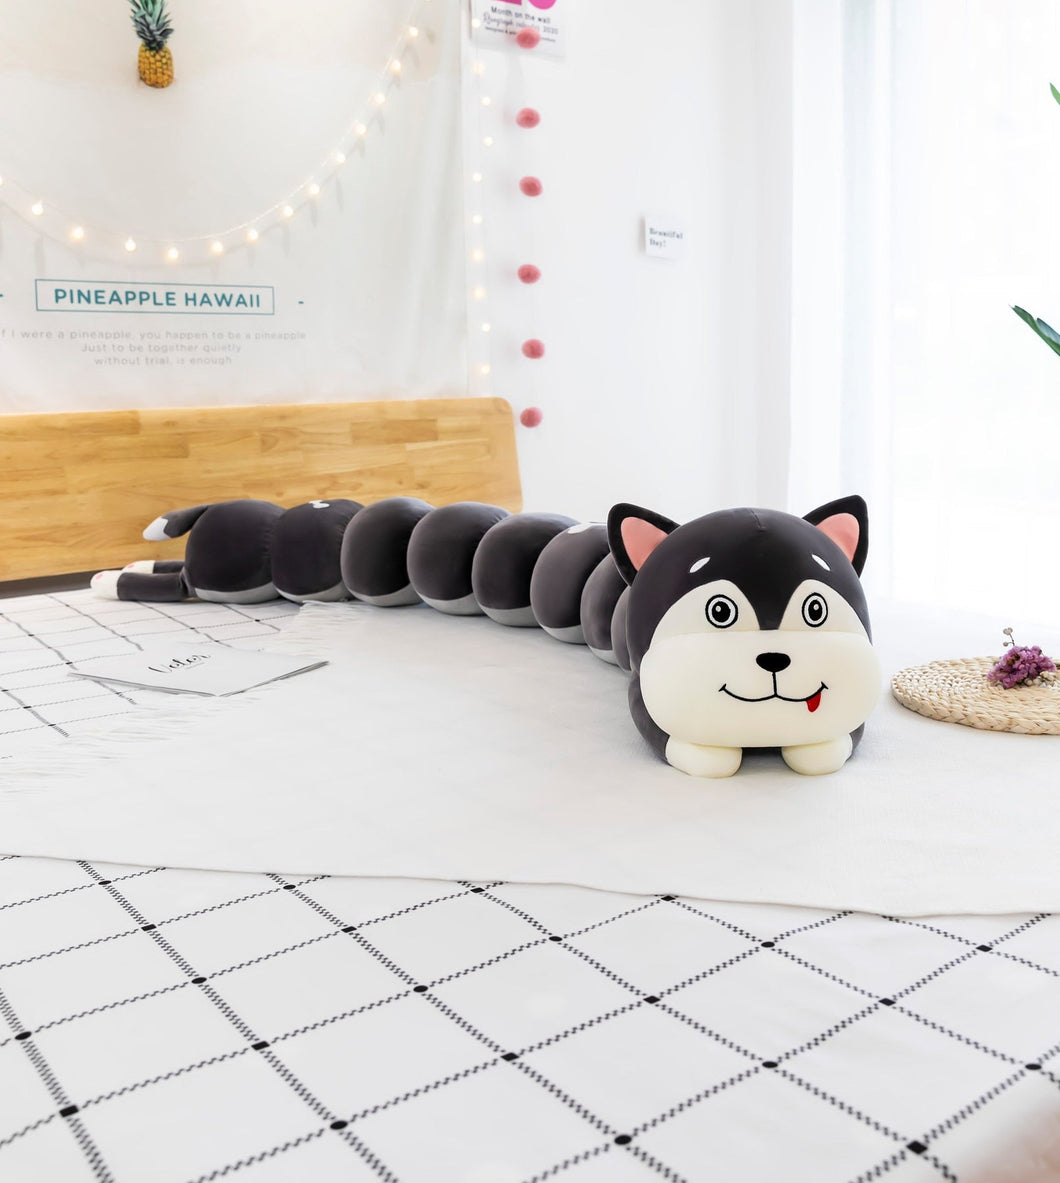 Funny Crazy Caterpillar Husky Plush Toys and Pillows-Stuffed Animals-Home Decor, Siberian Husky, Stuffed Animal-Large-Husky-2